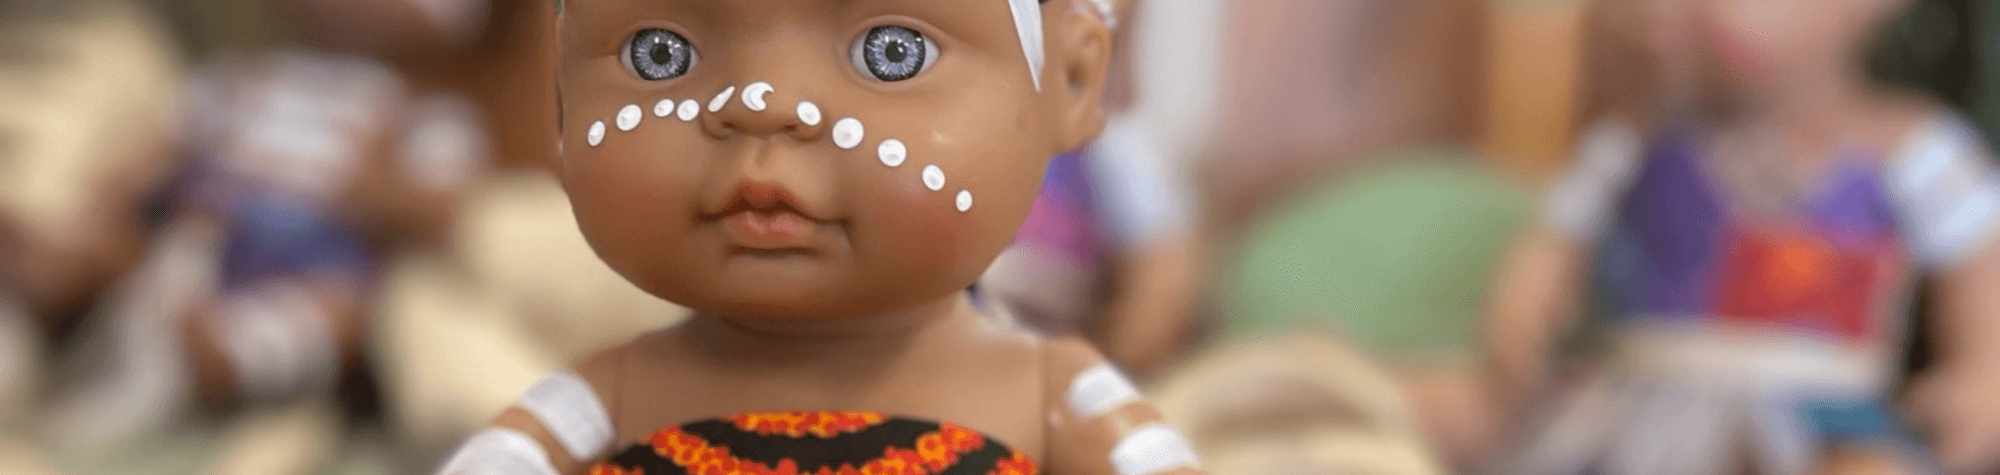 Bringing Children’s Indigenous Dolls to Little Scholars Campuses